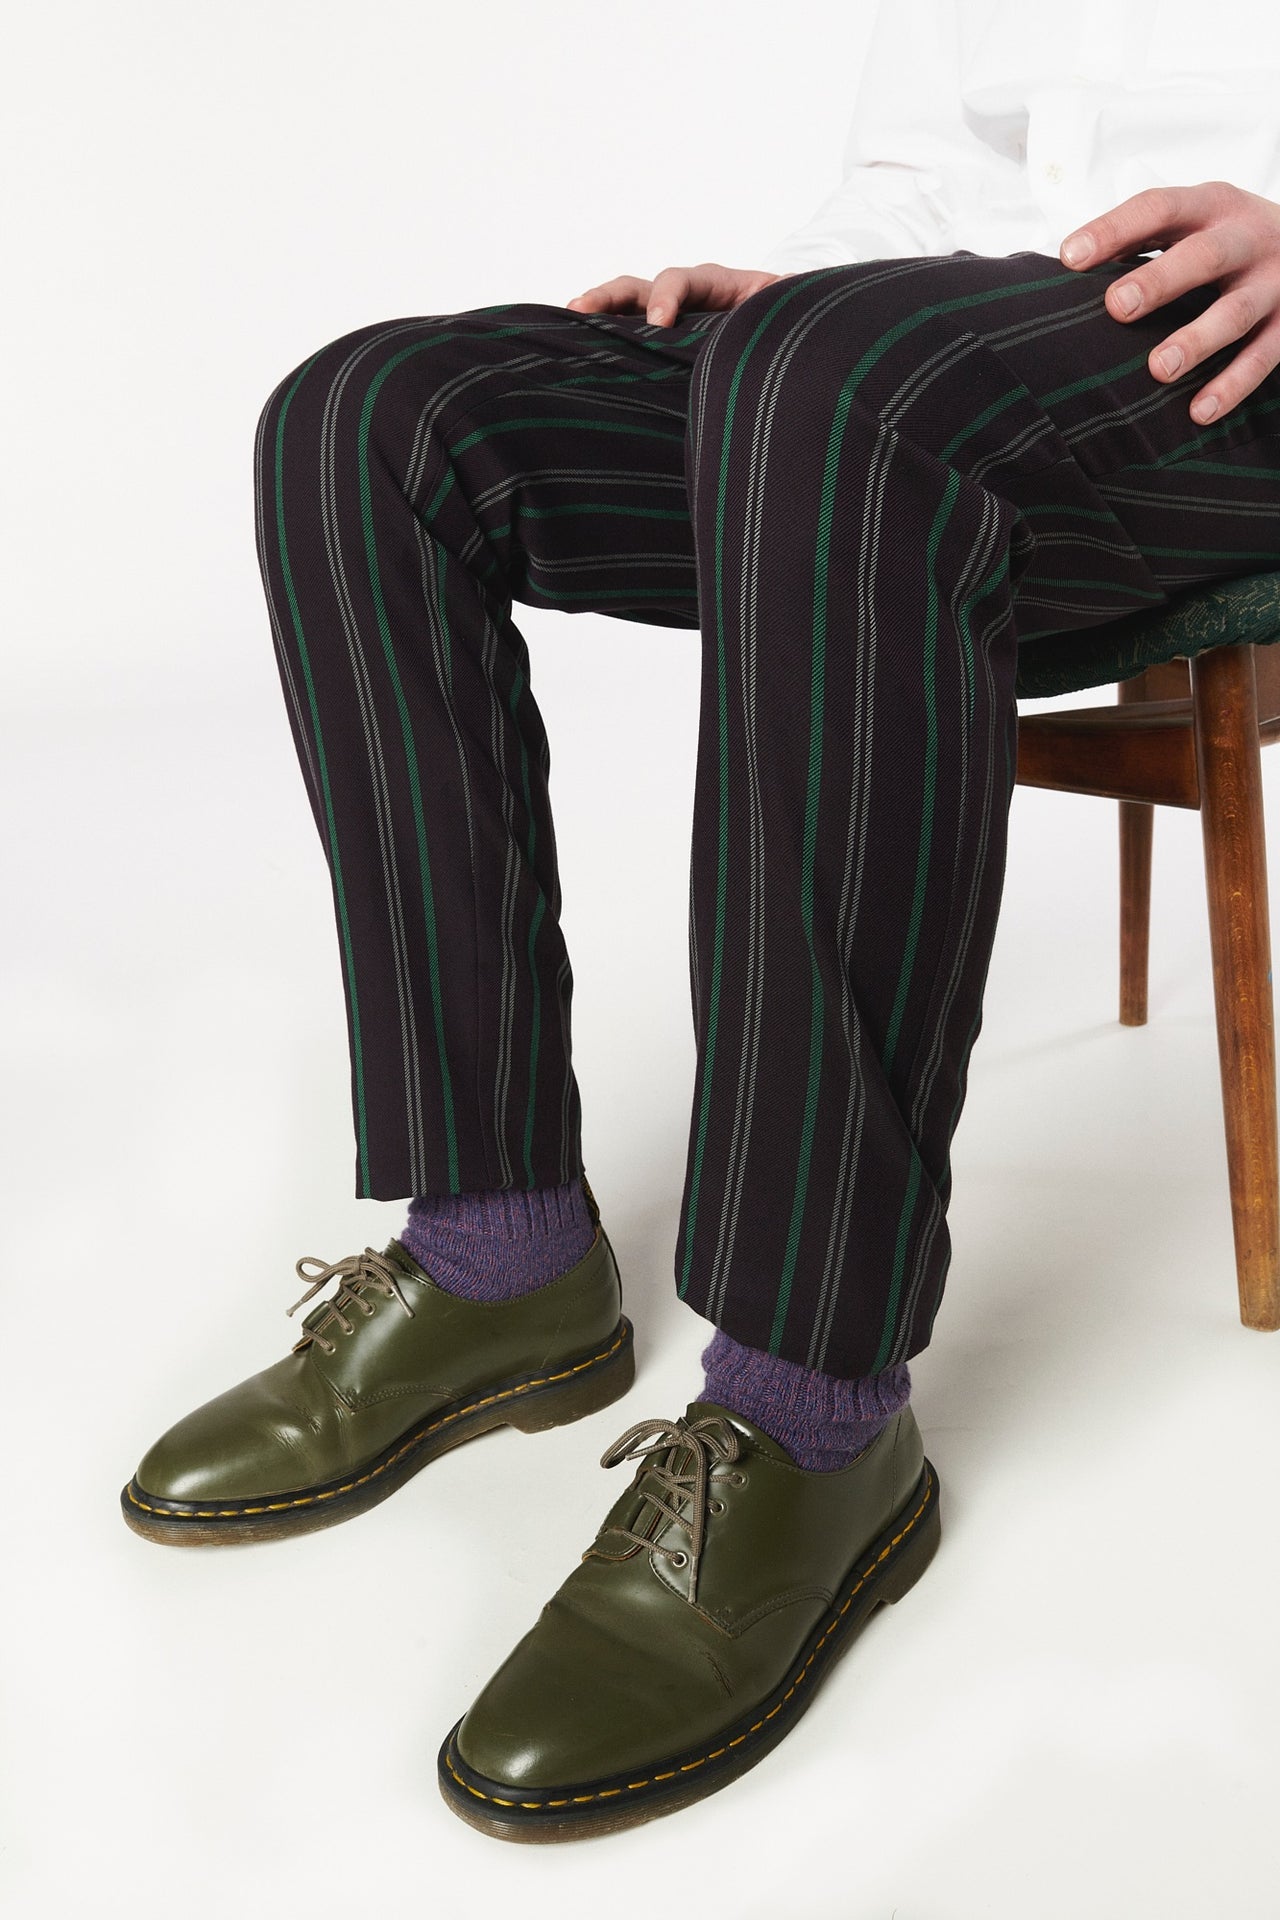 Bohemian Trousers in an Eggplant Dark Purple and Emerald Green Stripe in the Finest Italian Cotton by Laniﬁcio Subalpino